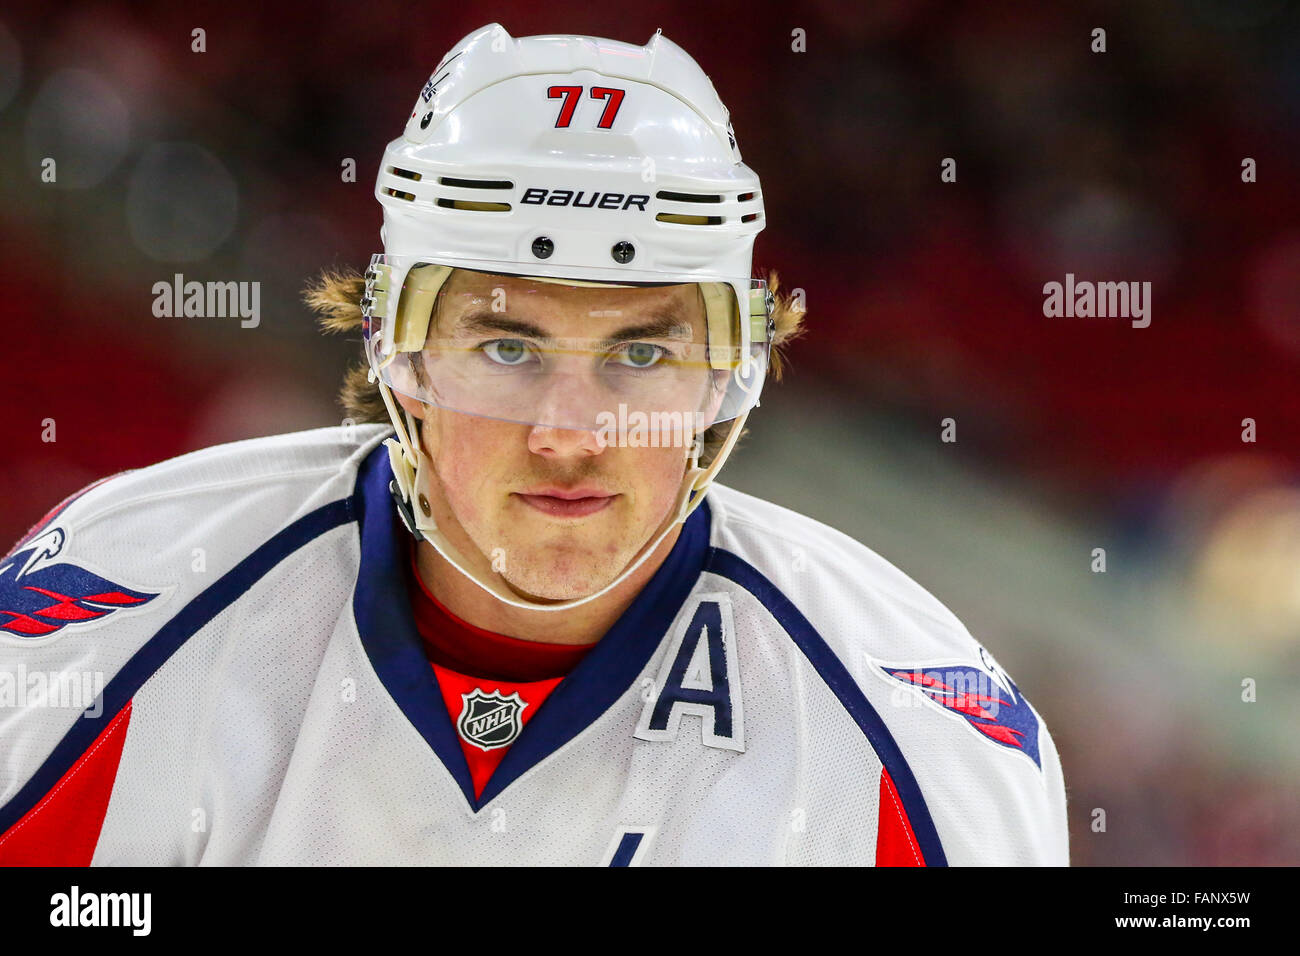 NHL on X: Washington's @TJOshie77 was given the name “Keeway